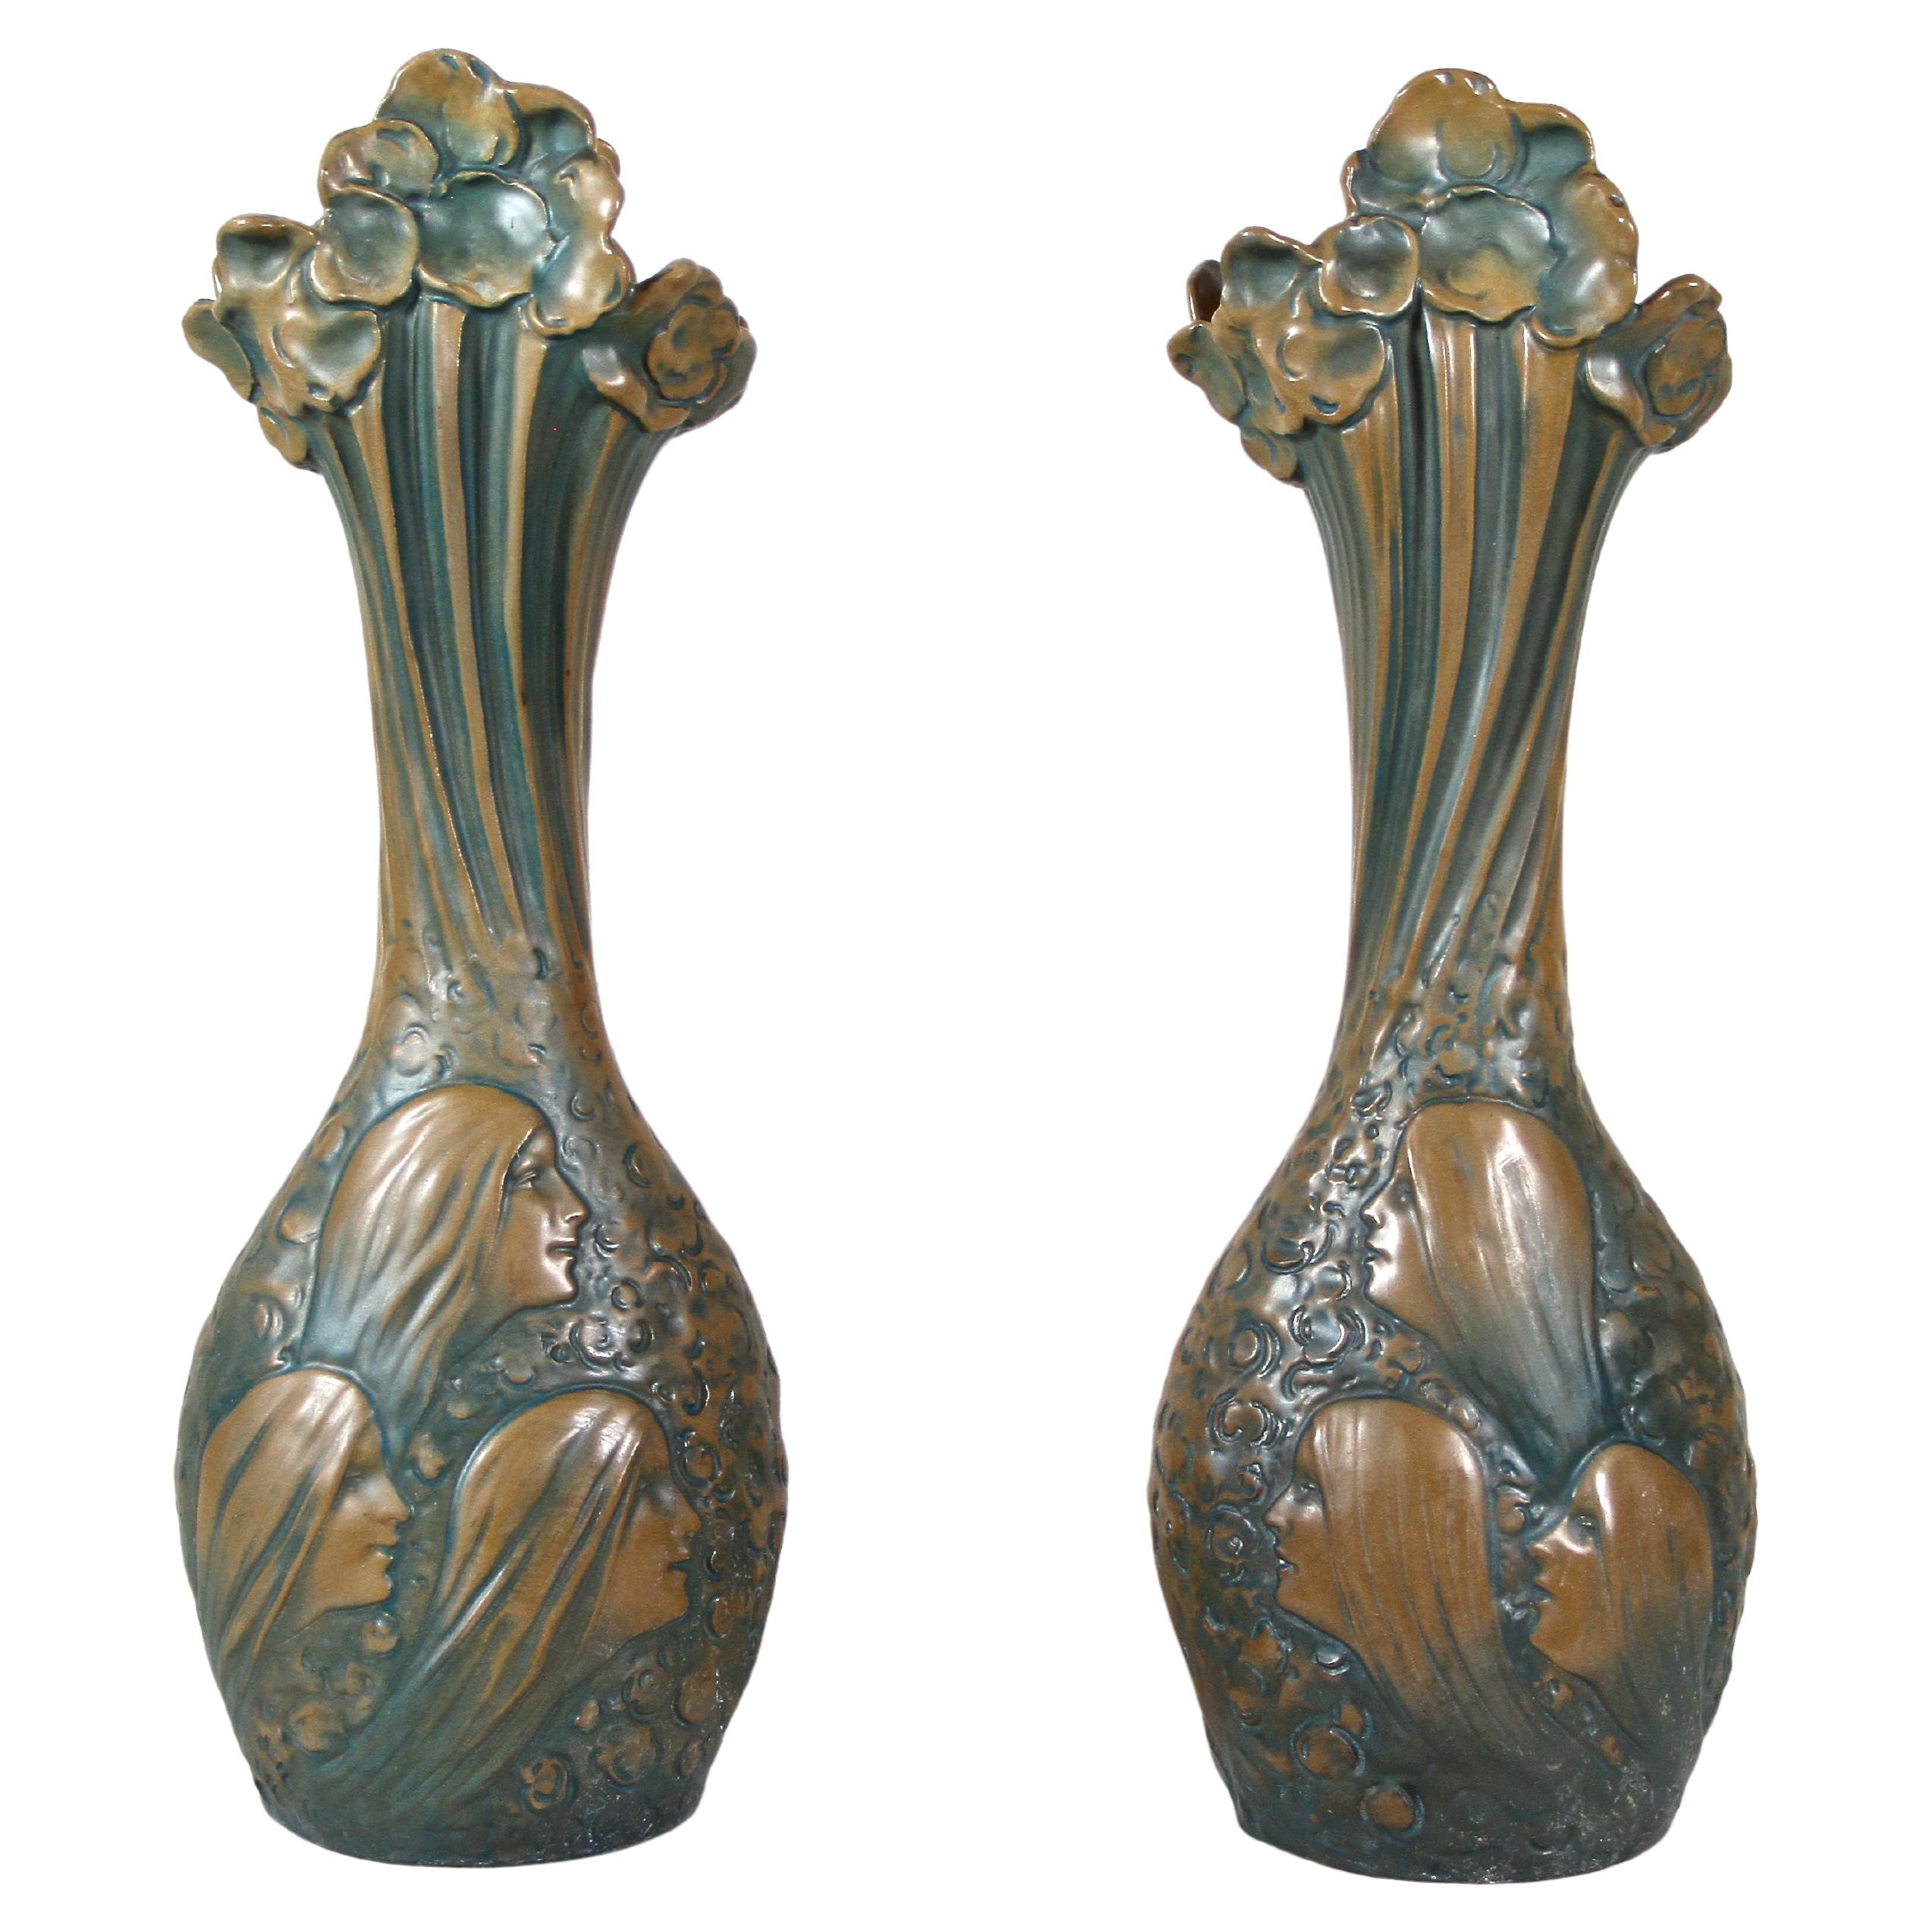 Pair of Art Nouveau Majolica Vases by B. Bloch Eichwald, Bohemia, circa 1900